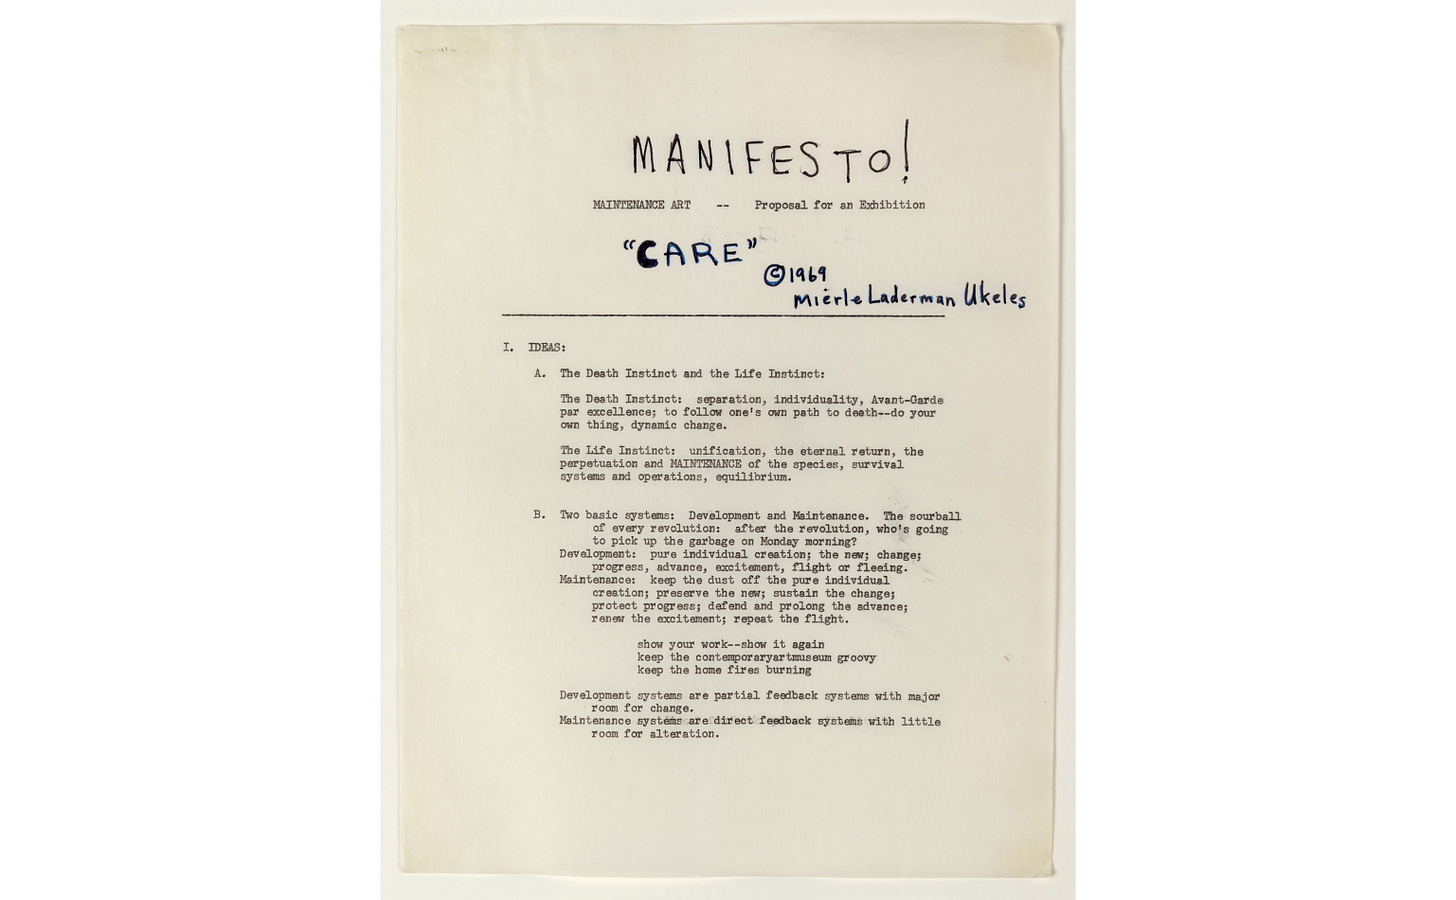 MANIFESTO FOR MAINTENANCE ART, 1969!